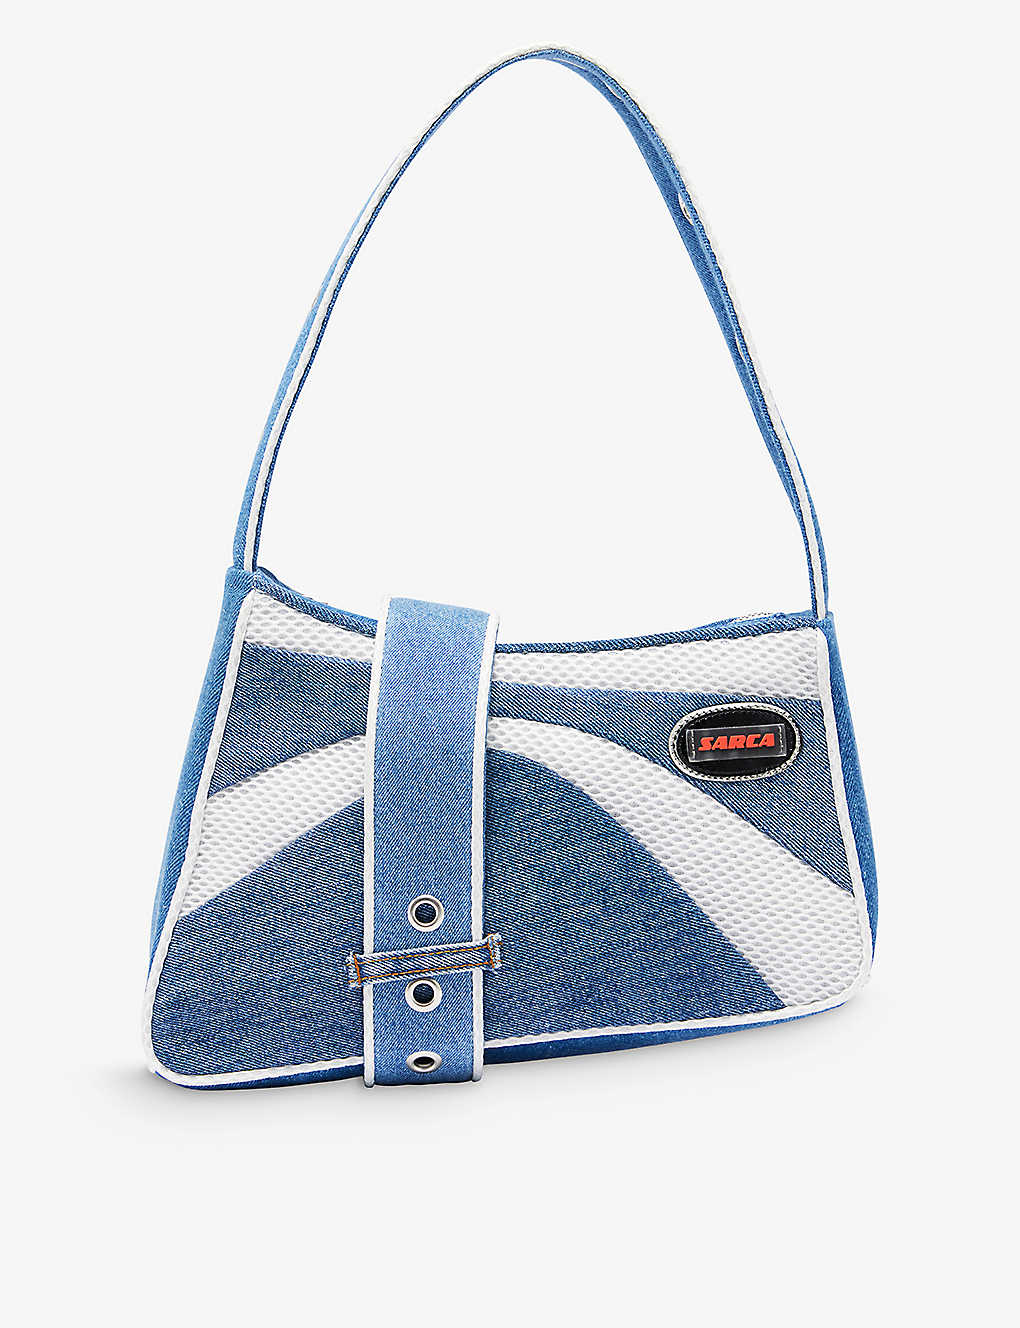 Ancuta Sarca Womens Blue White Saddle Buckle Recycled-denim Shoulder Bag